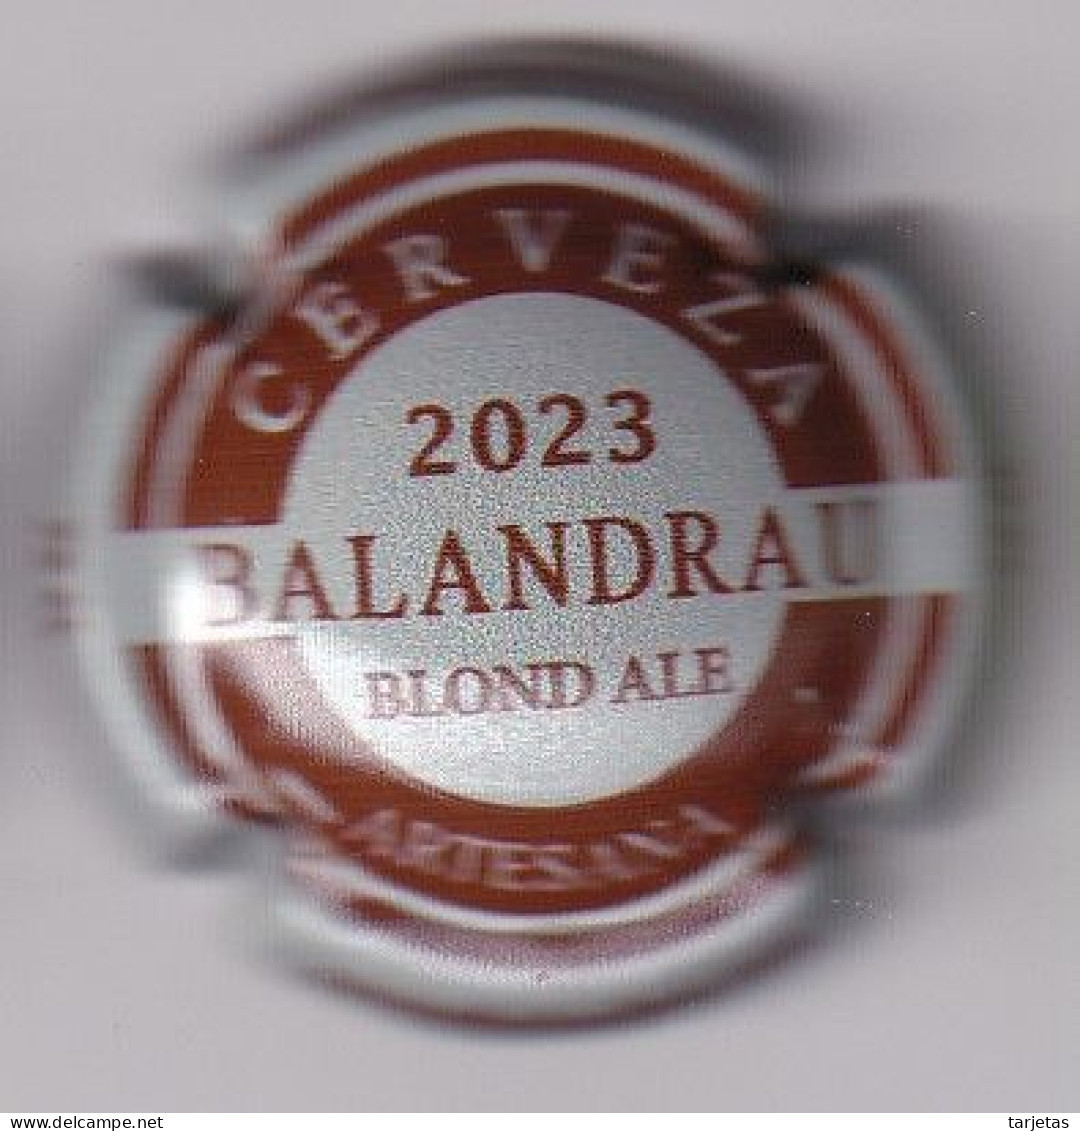 CHAPA DE CERVEZA ARTESANA BALANDRAU BLOND ALE 2023 (BEER-BIERE) CORONA - Beer